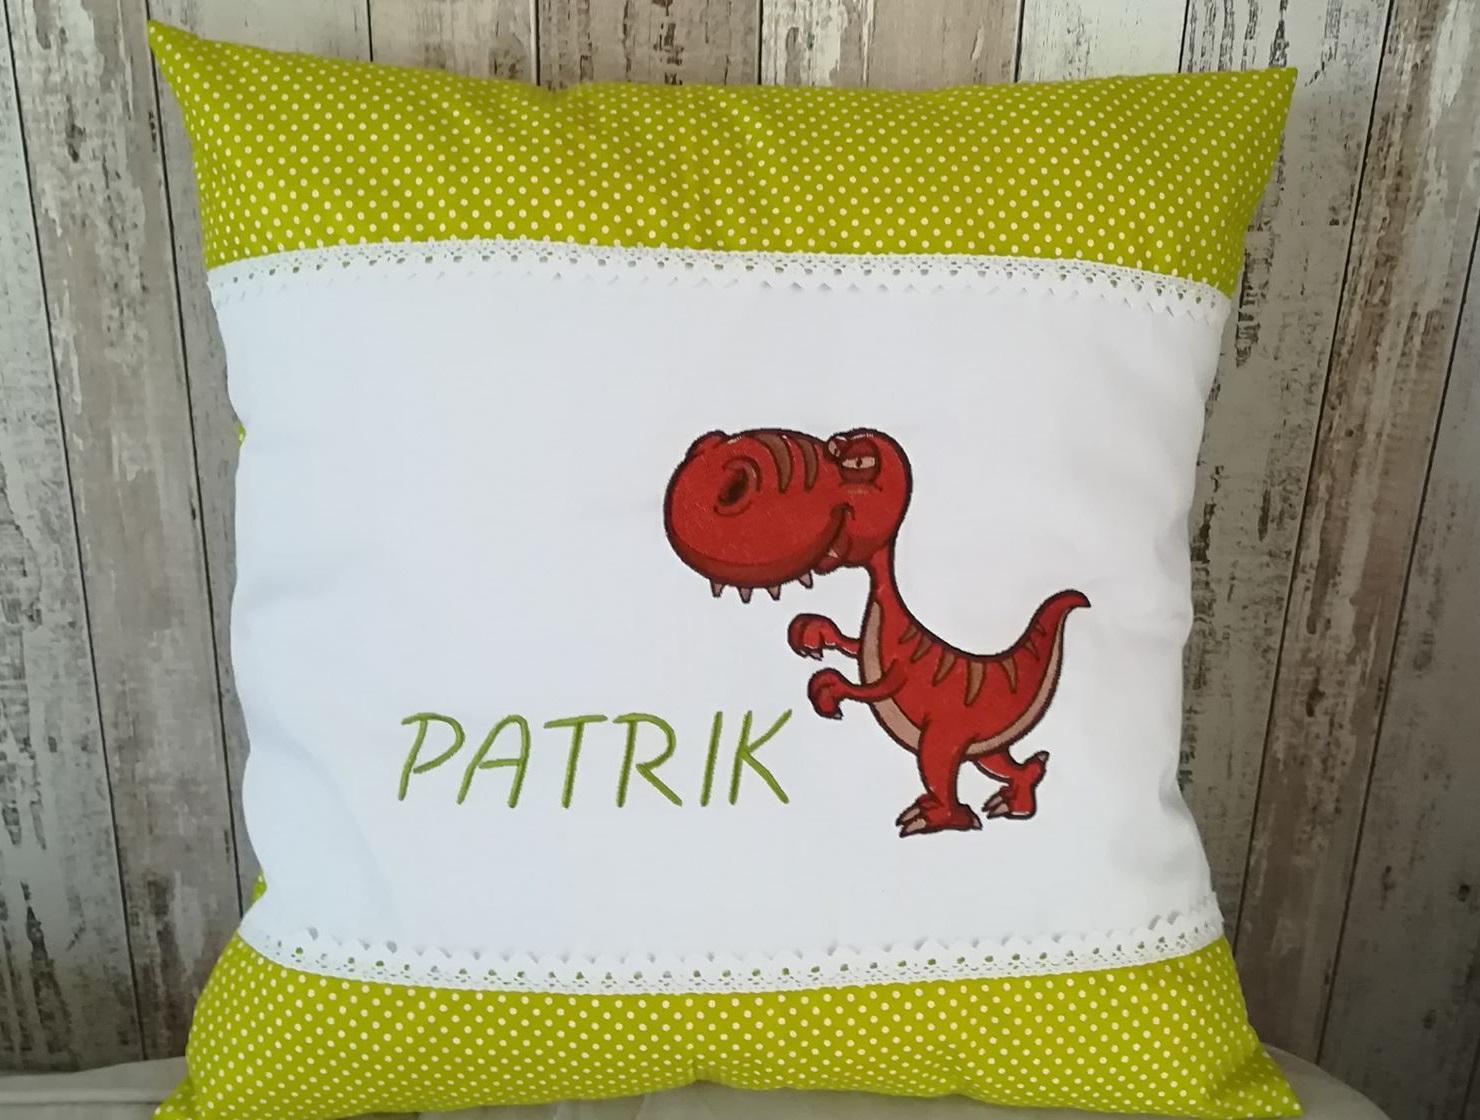 Embroidered cushion with Tiranosaur design